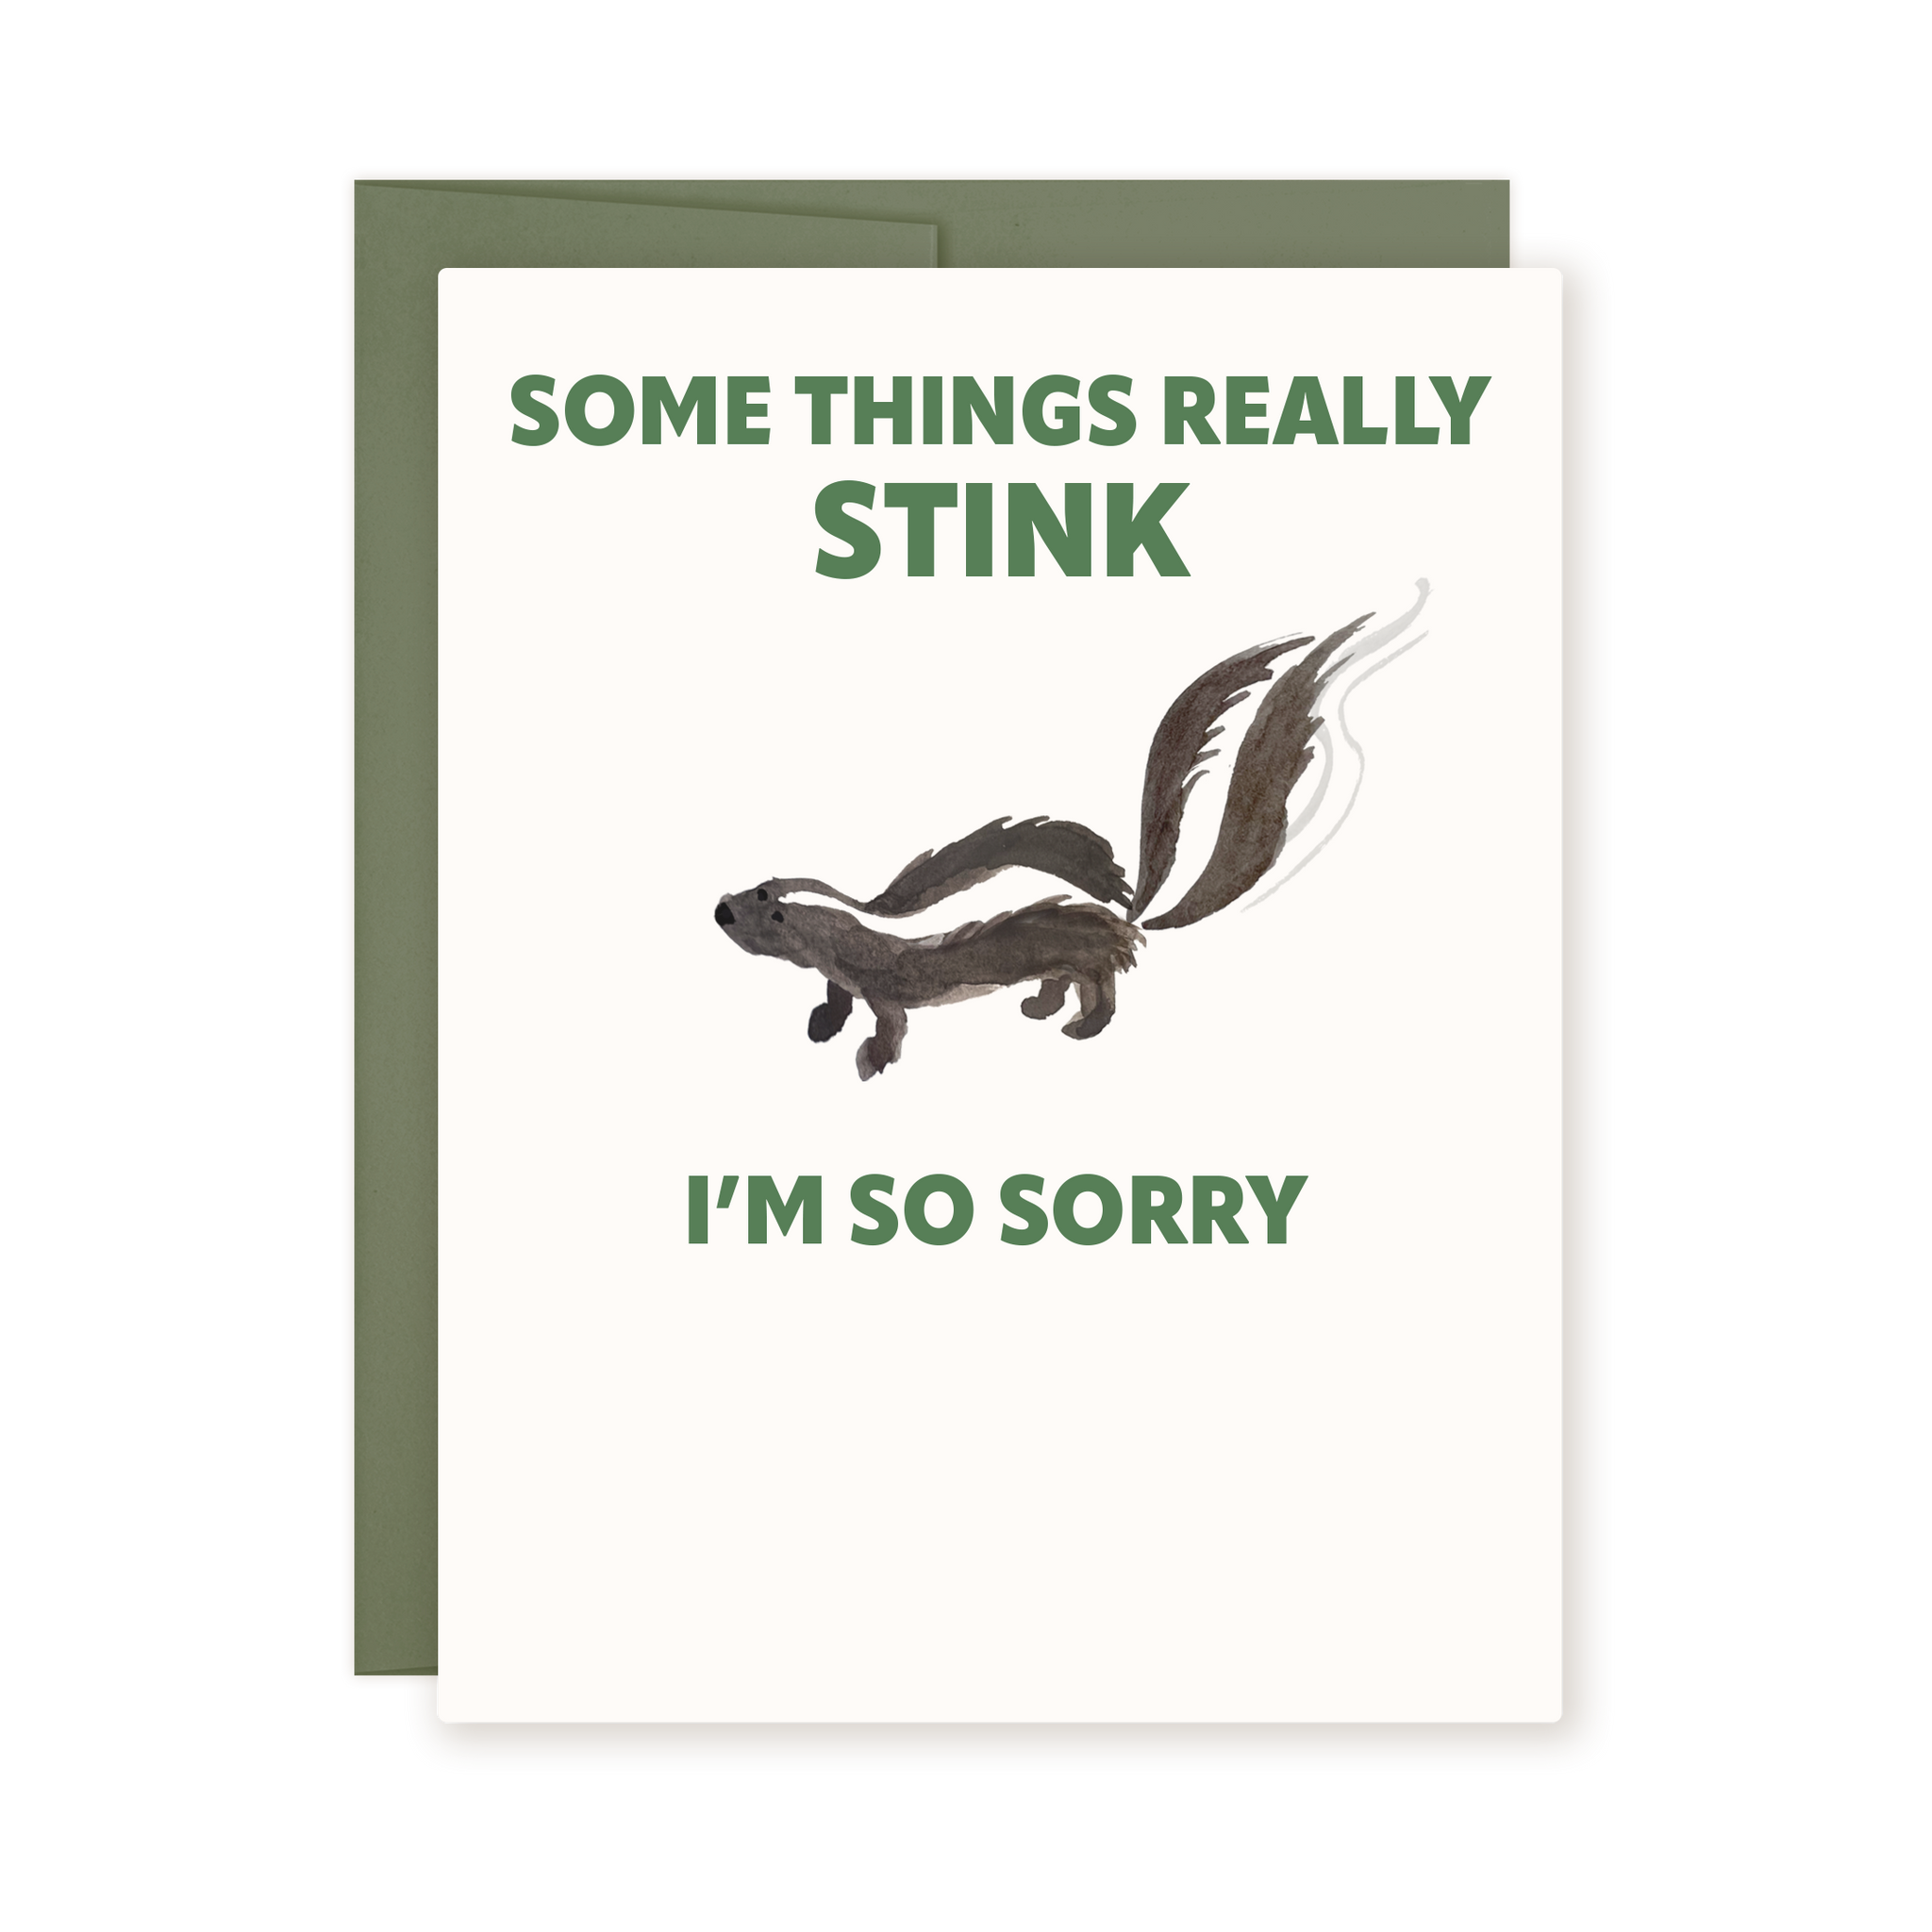 Stink Card